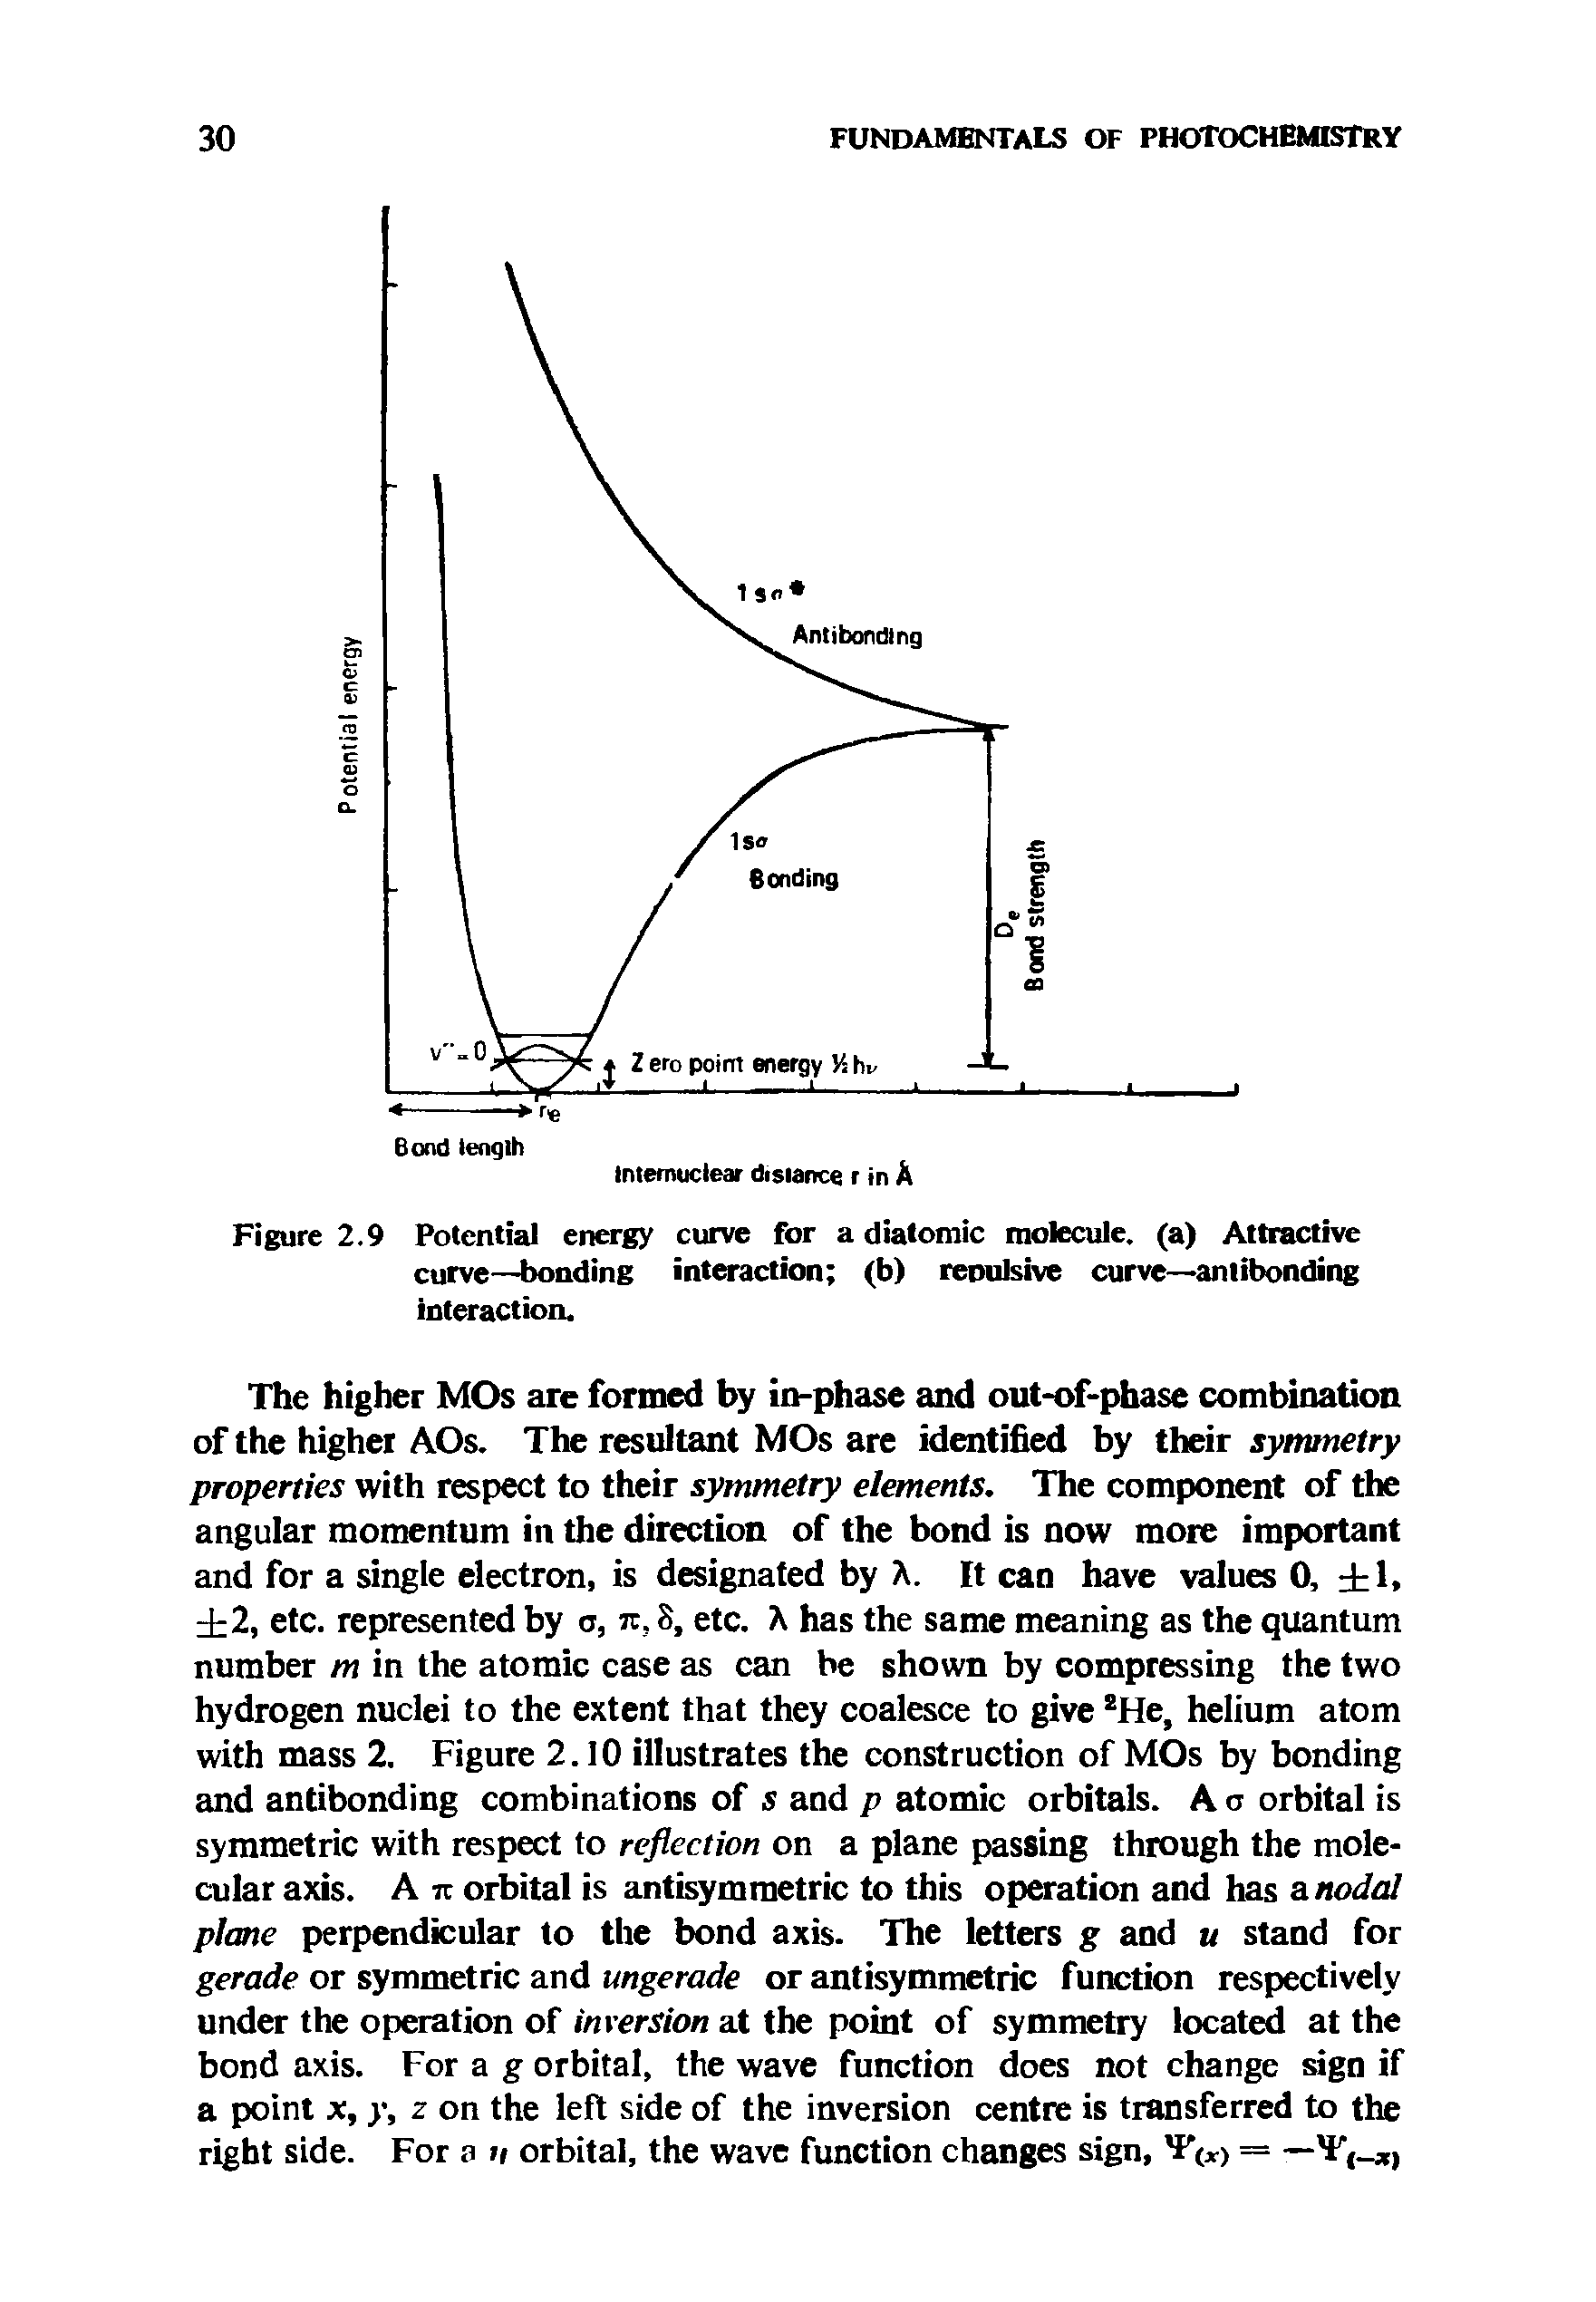 Figure 2.9 Potential energy curve for a diatomic molecule, (a) Attractive curve—bonding interaction (b) repulsive curve—antibonding interaction.